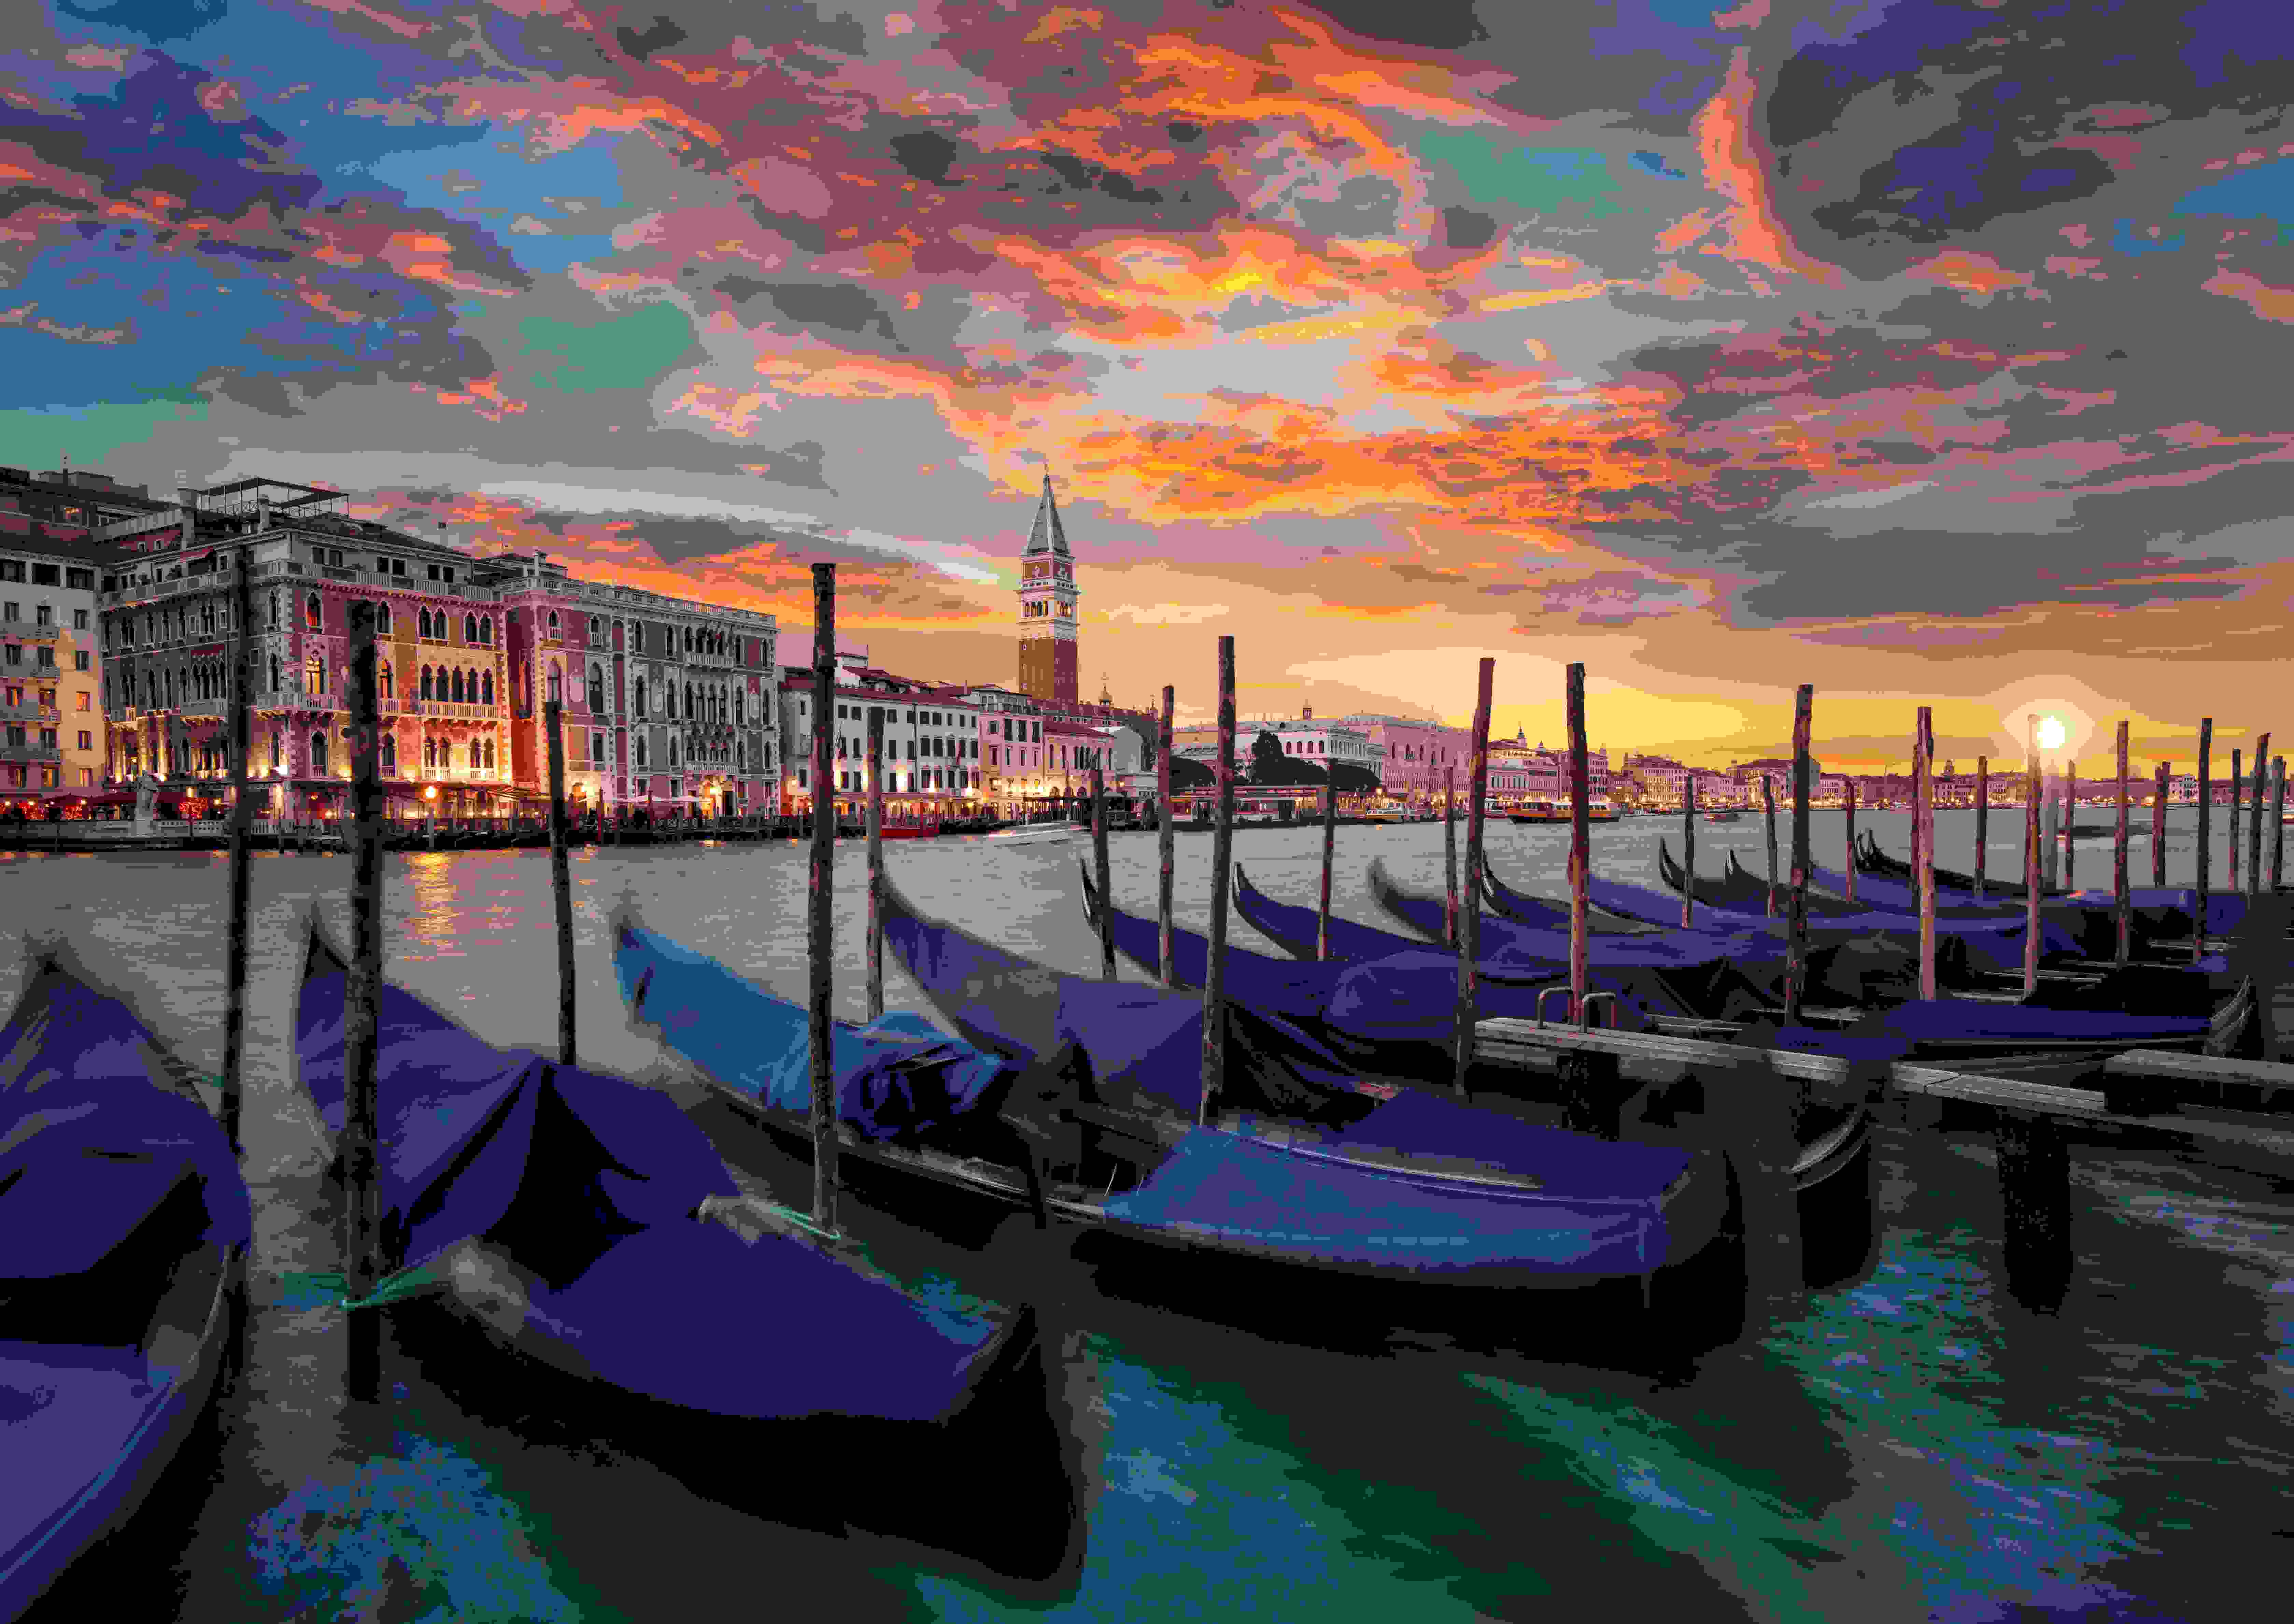 Venice Lido at sunset | Hotel Excelsior Venice Lido Resort, 5-star hotel in Venice